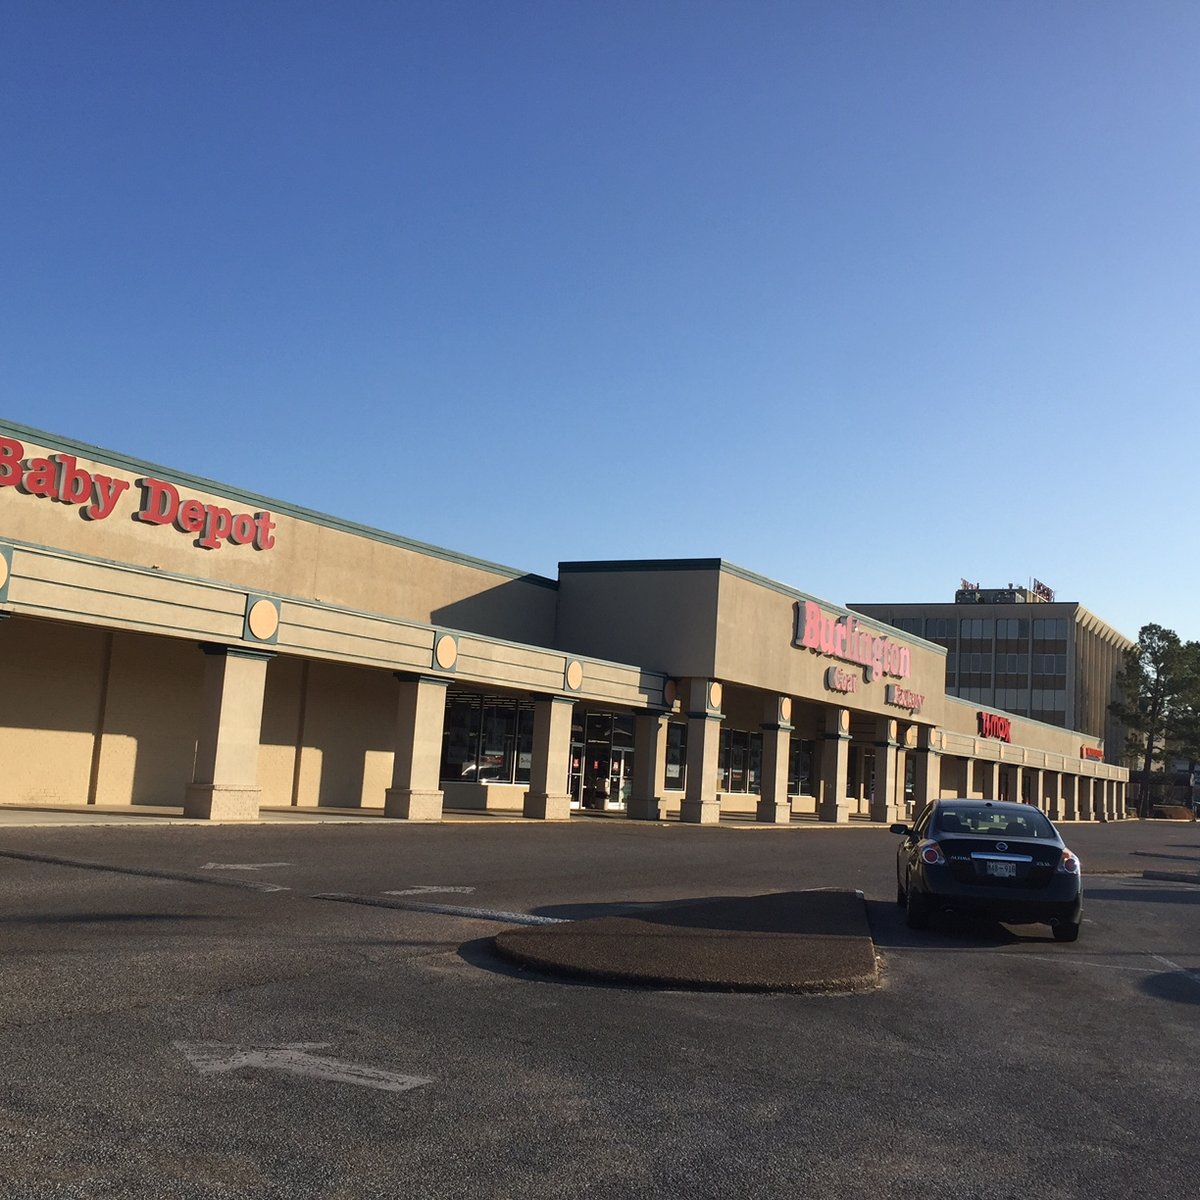 Academy, Burlington, Five Below open in new East Dallas shopping center